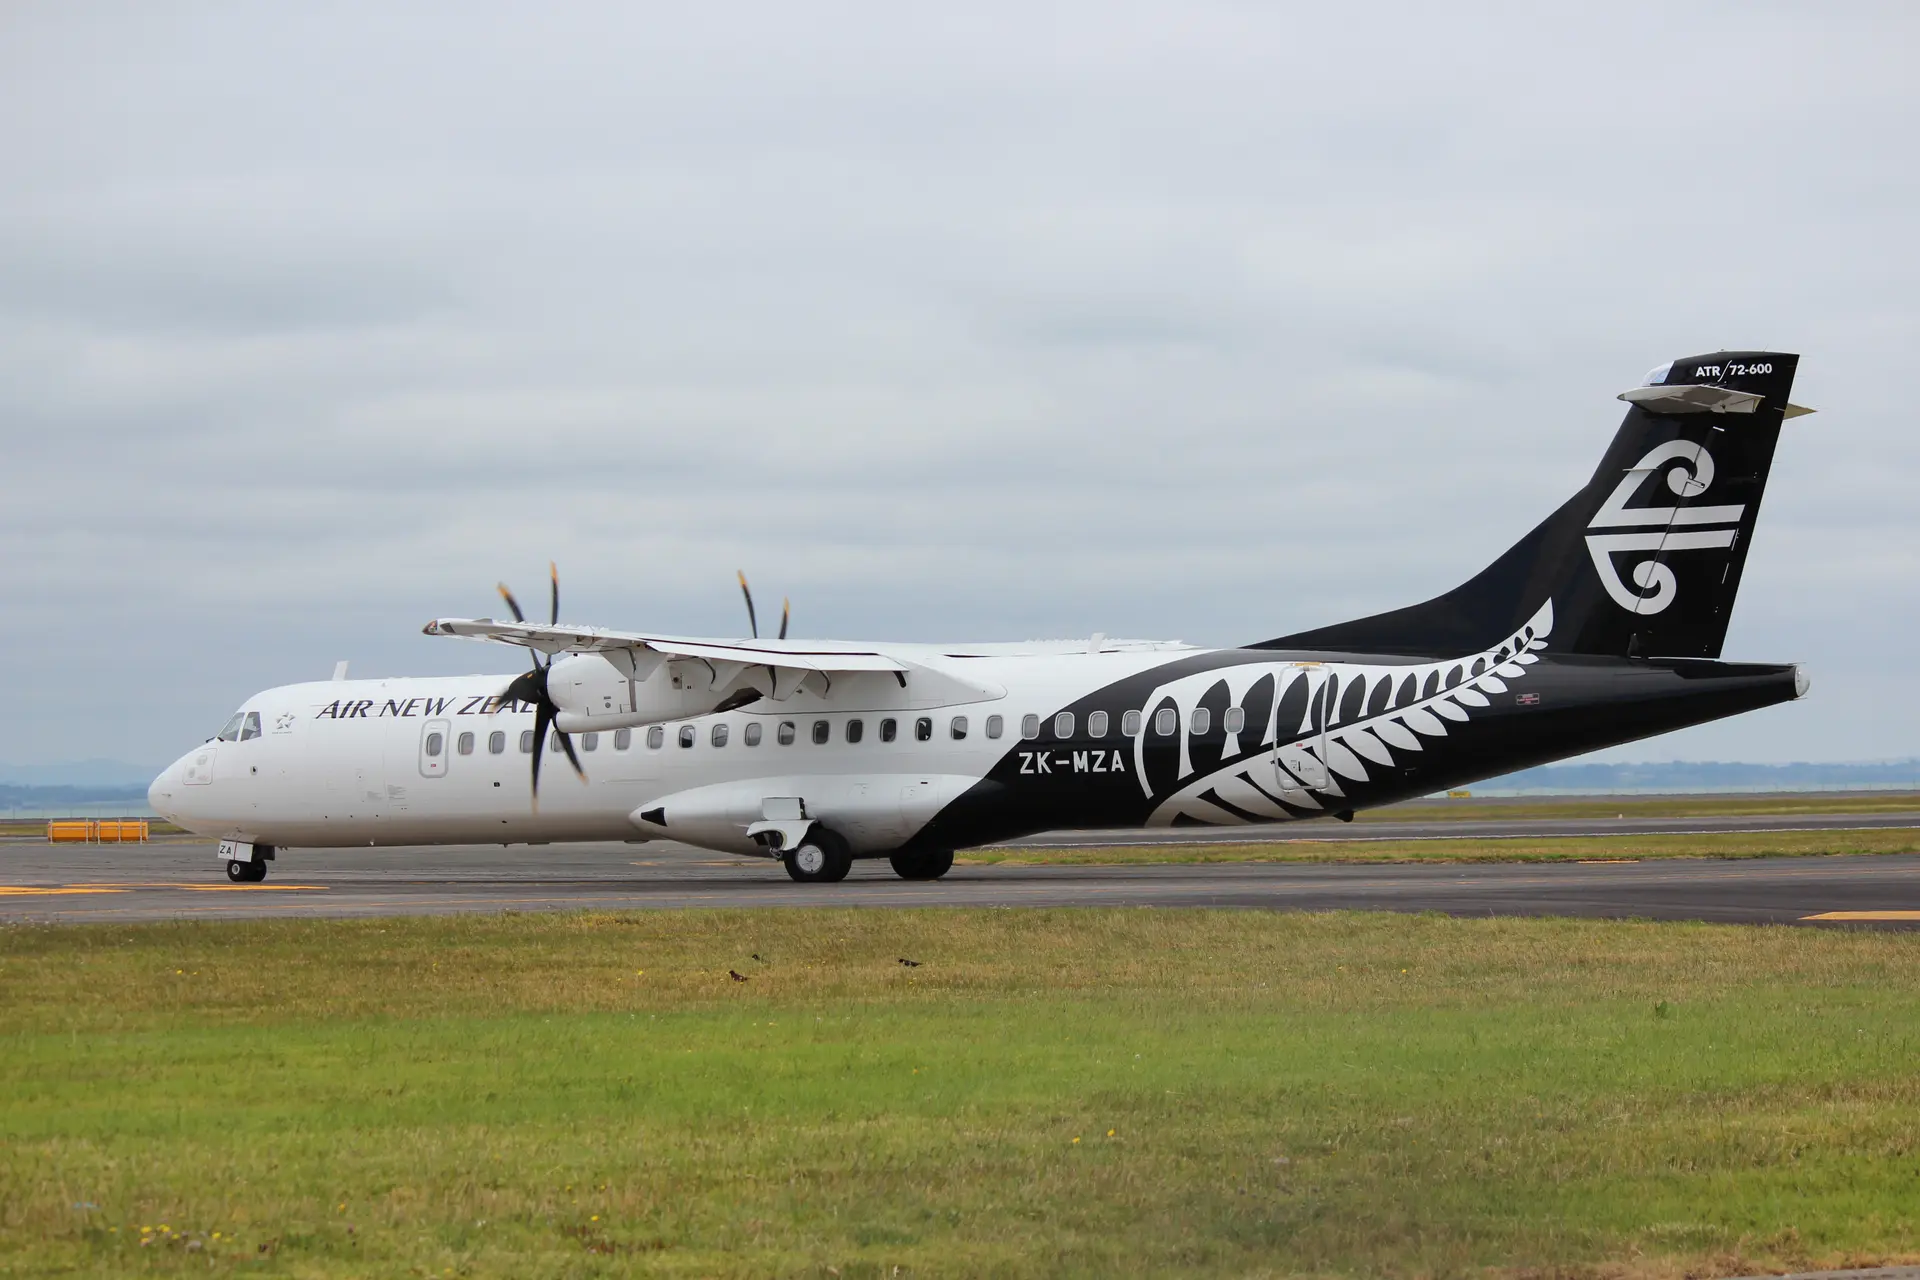 Airlines News - Air New Zealand offers flights to secret destinations